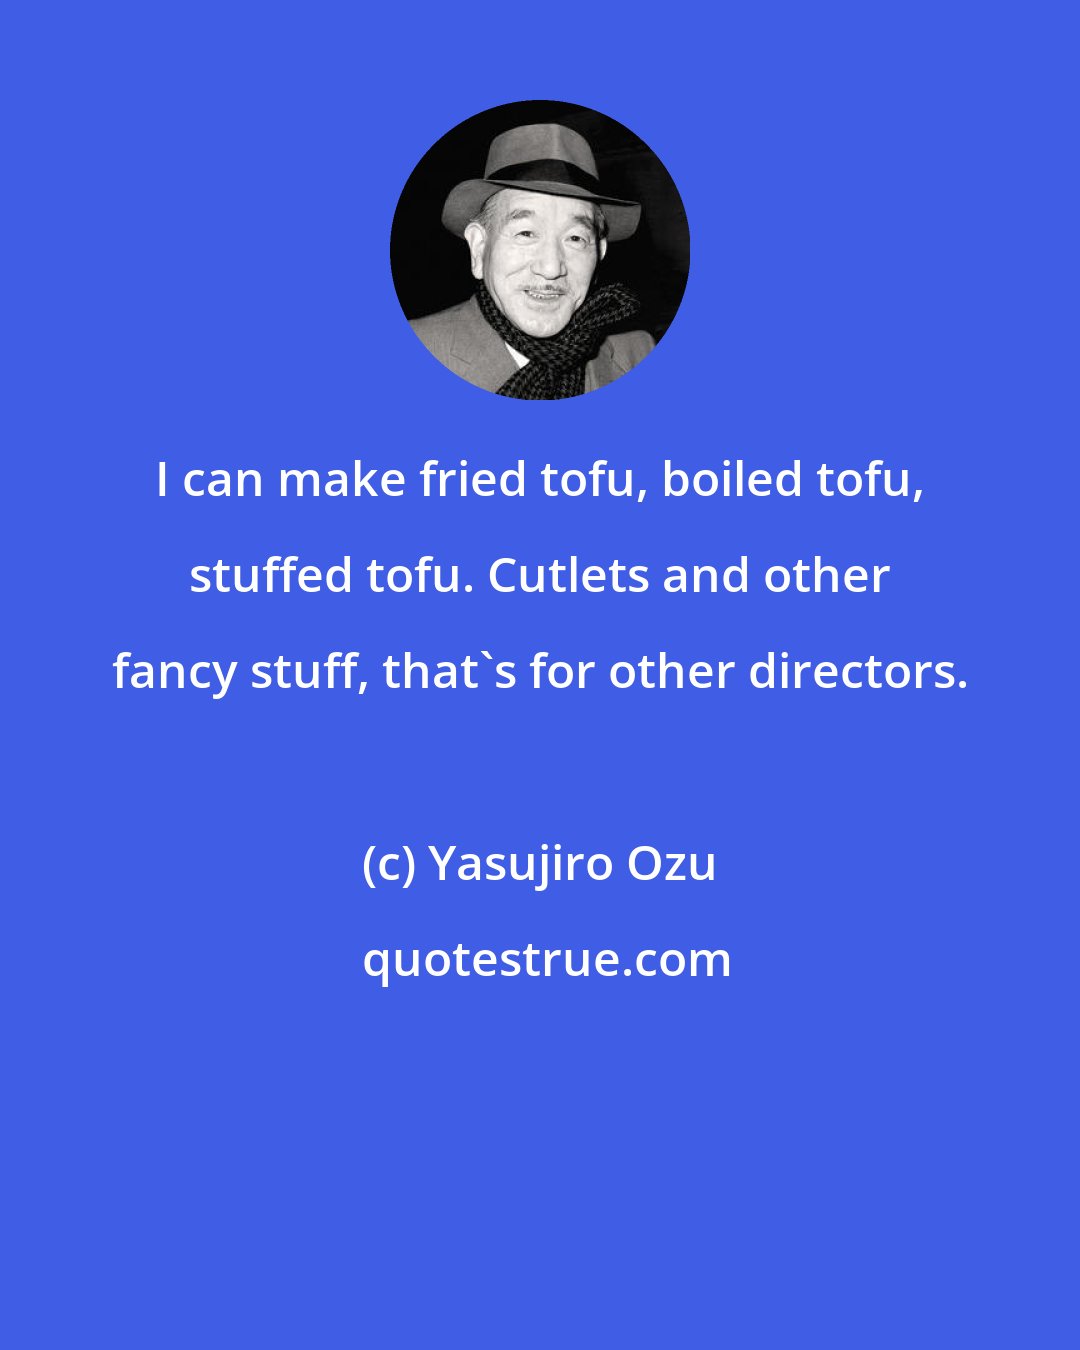 Yasujiro Ozu: I can make fried tofu, boiled tofu, stuffed tofu. Cutlets and other fancy stuff, that's for other directors.